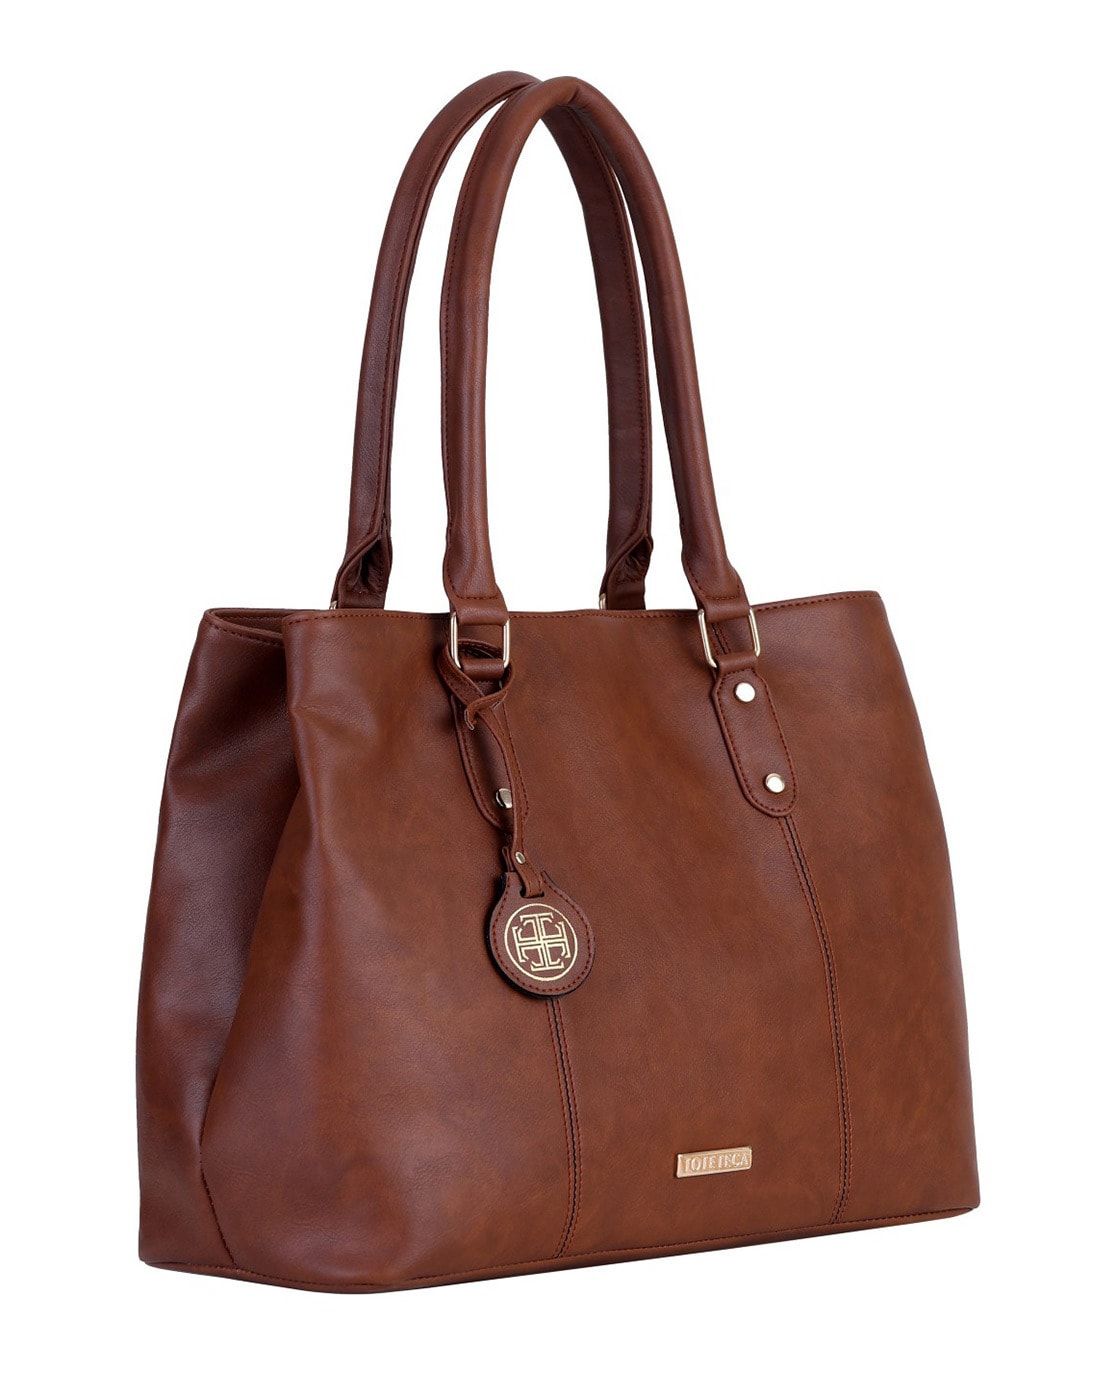 Formal Handbags For Women - Buy Formal Handbags For Women online in India